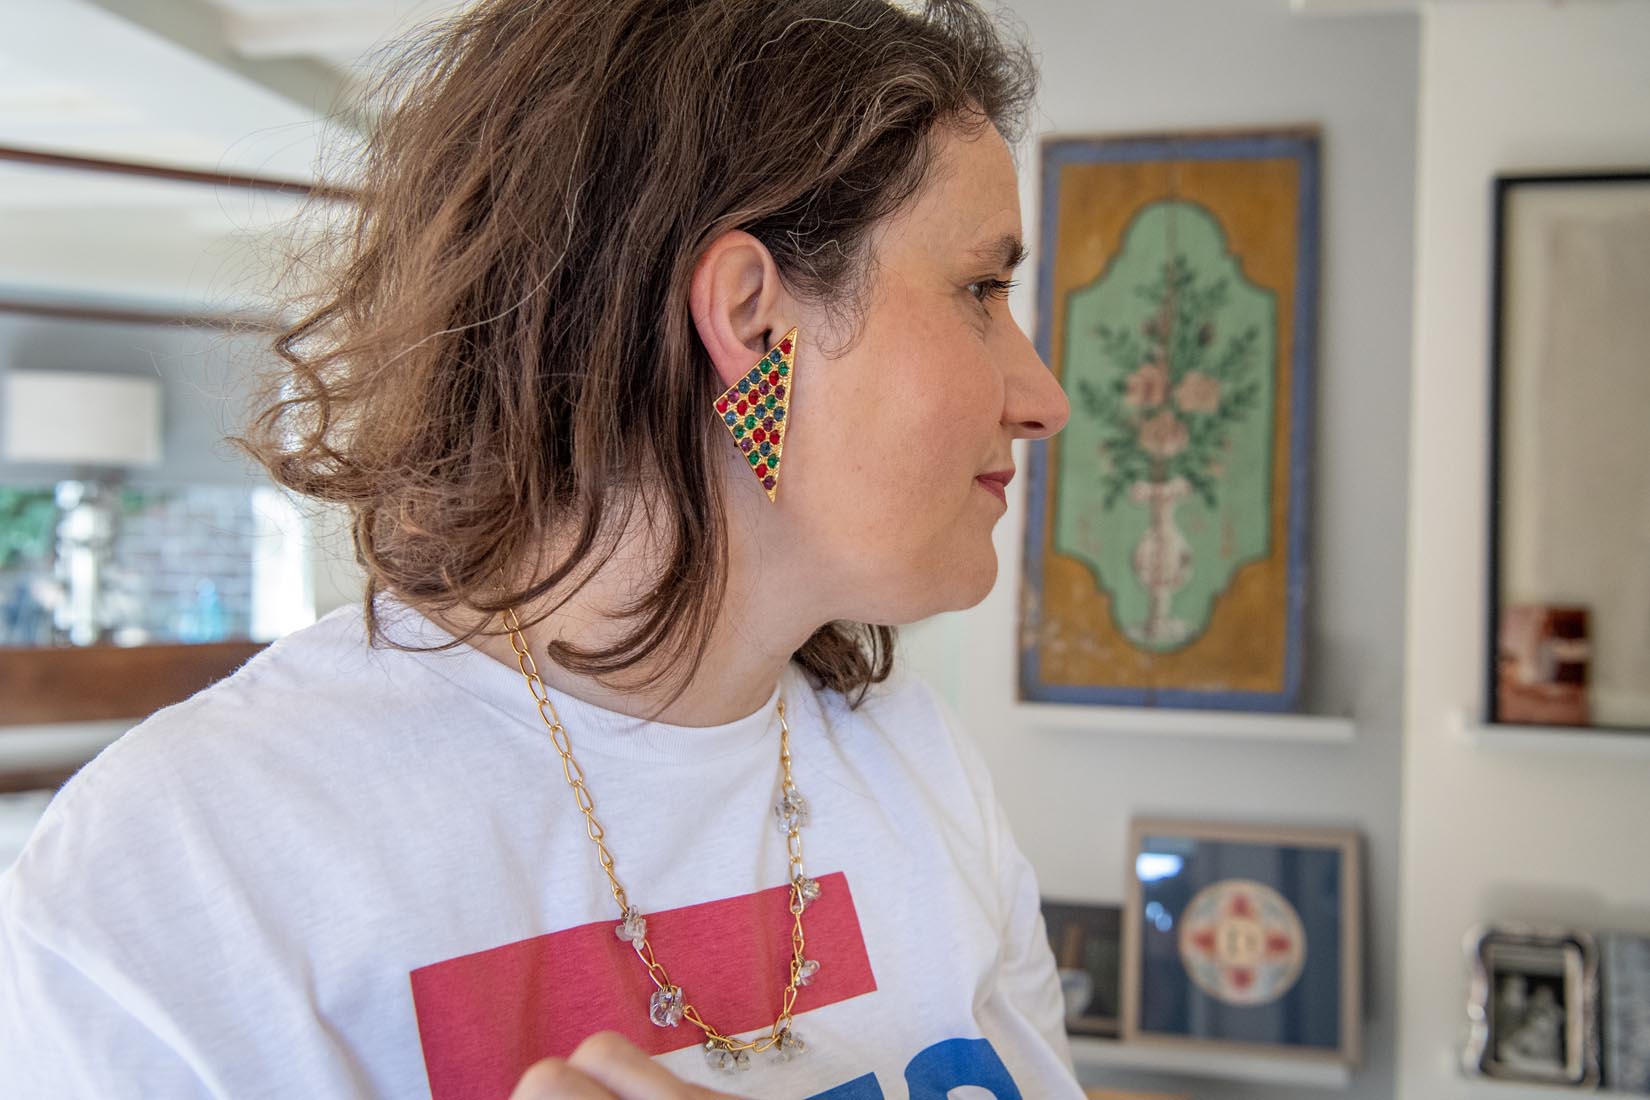 Eighties crystal triangle clip on earrings - Natalia Willmott